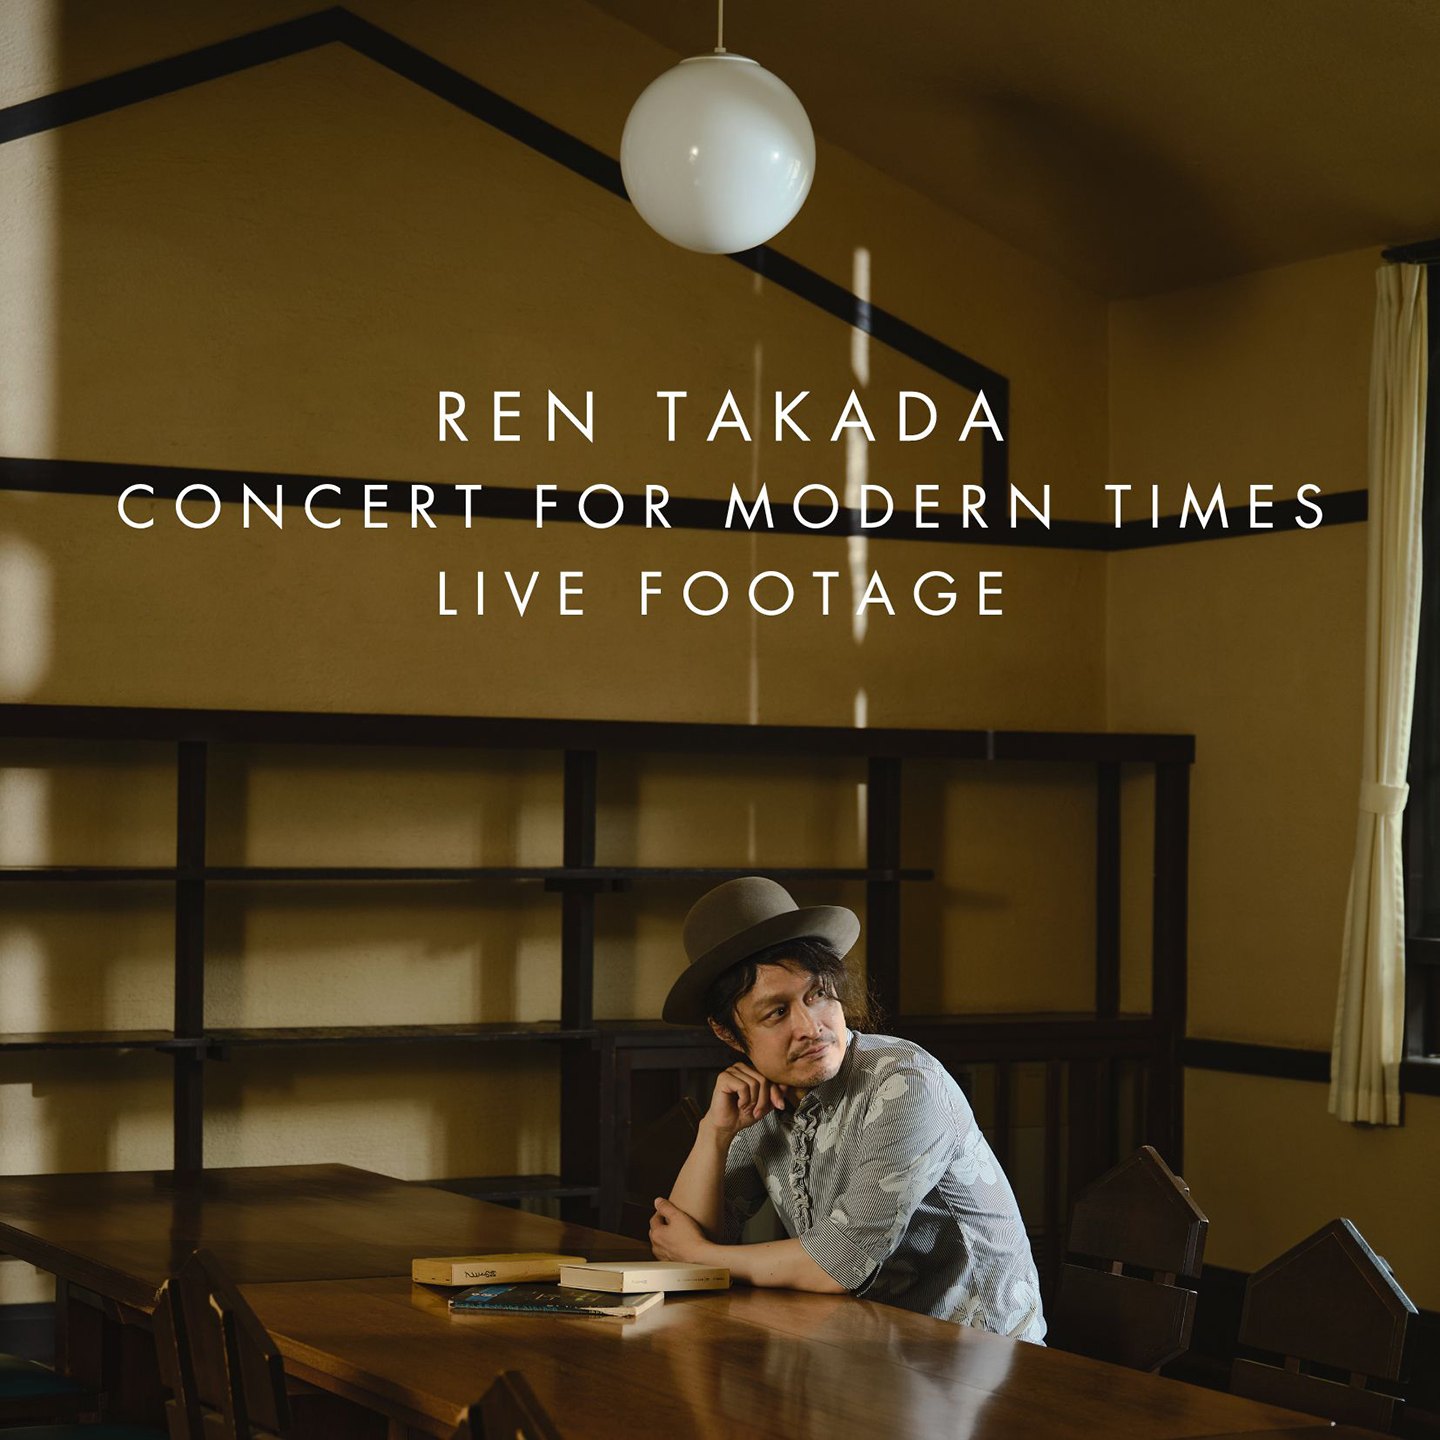 REN TAKADA CONCERT FOR MODERN TIMES LIVE FOOTAGE